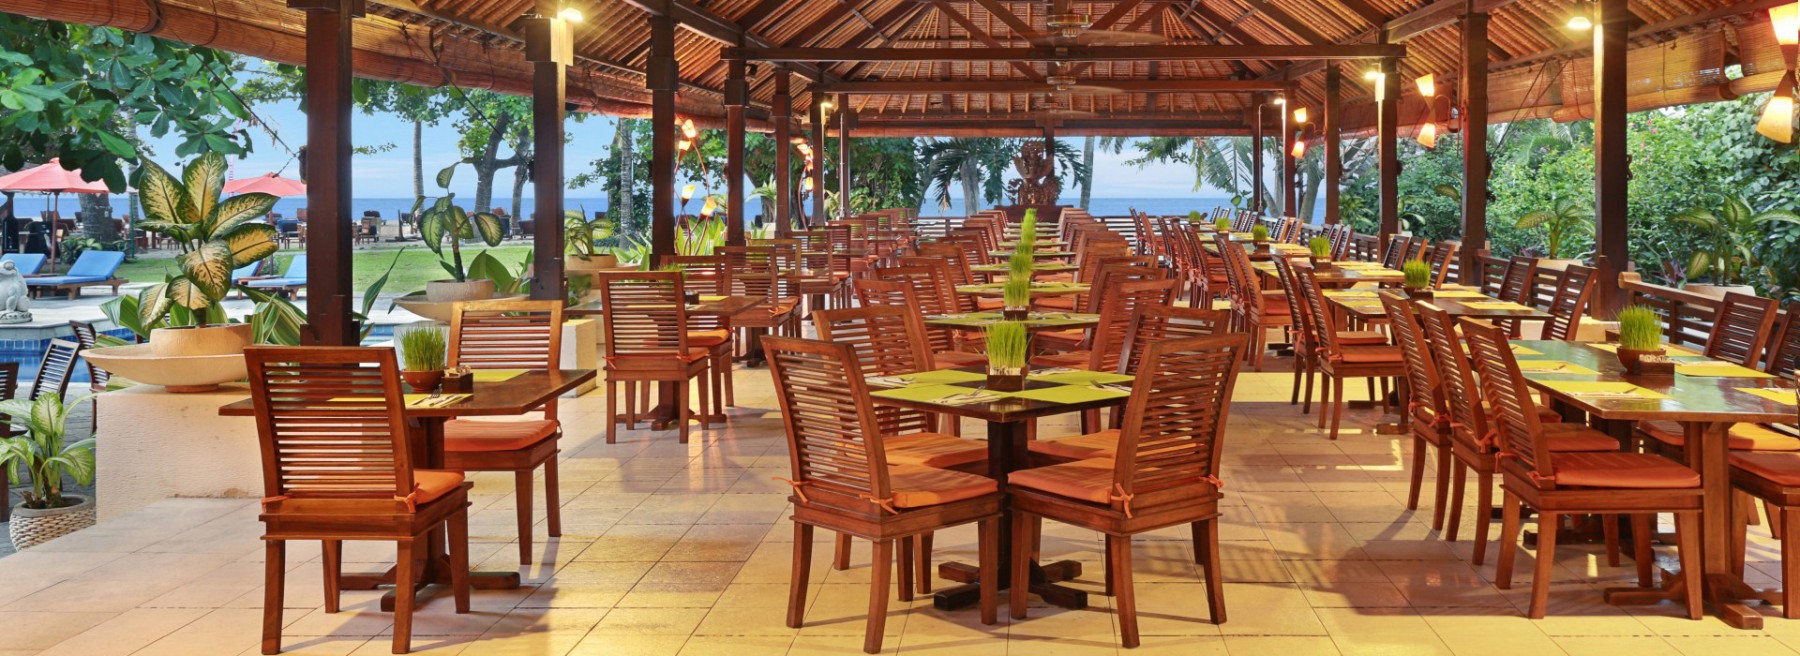 Mercure Bali Sanur Resort - Restaurants & Bars